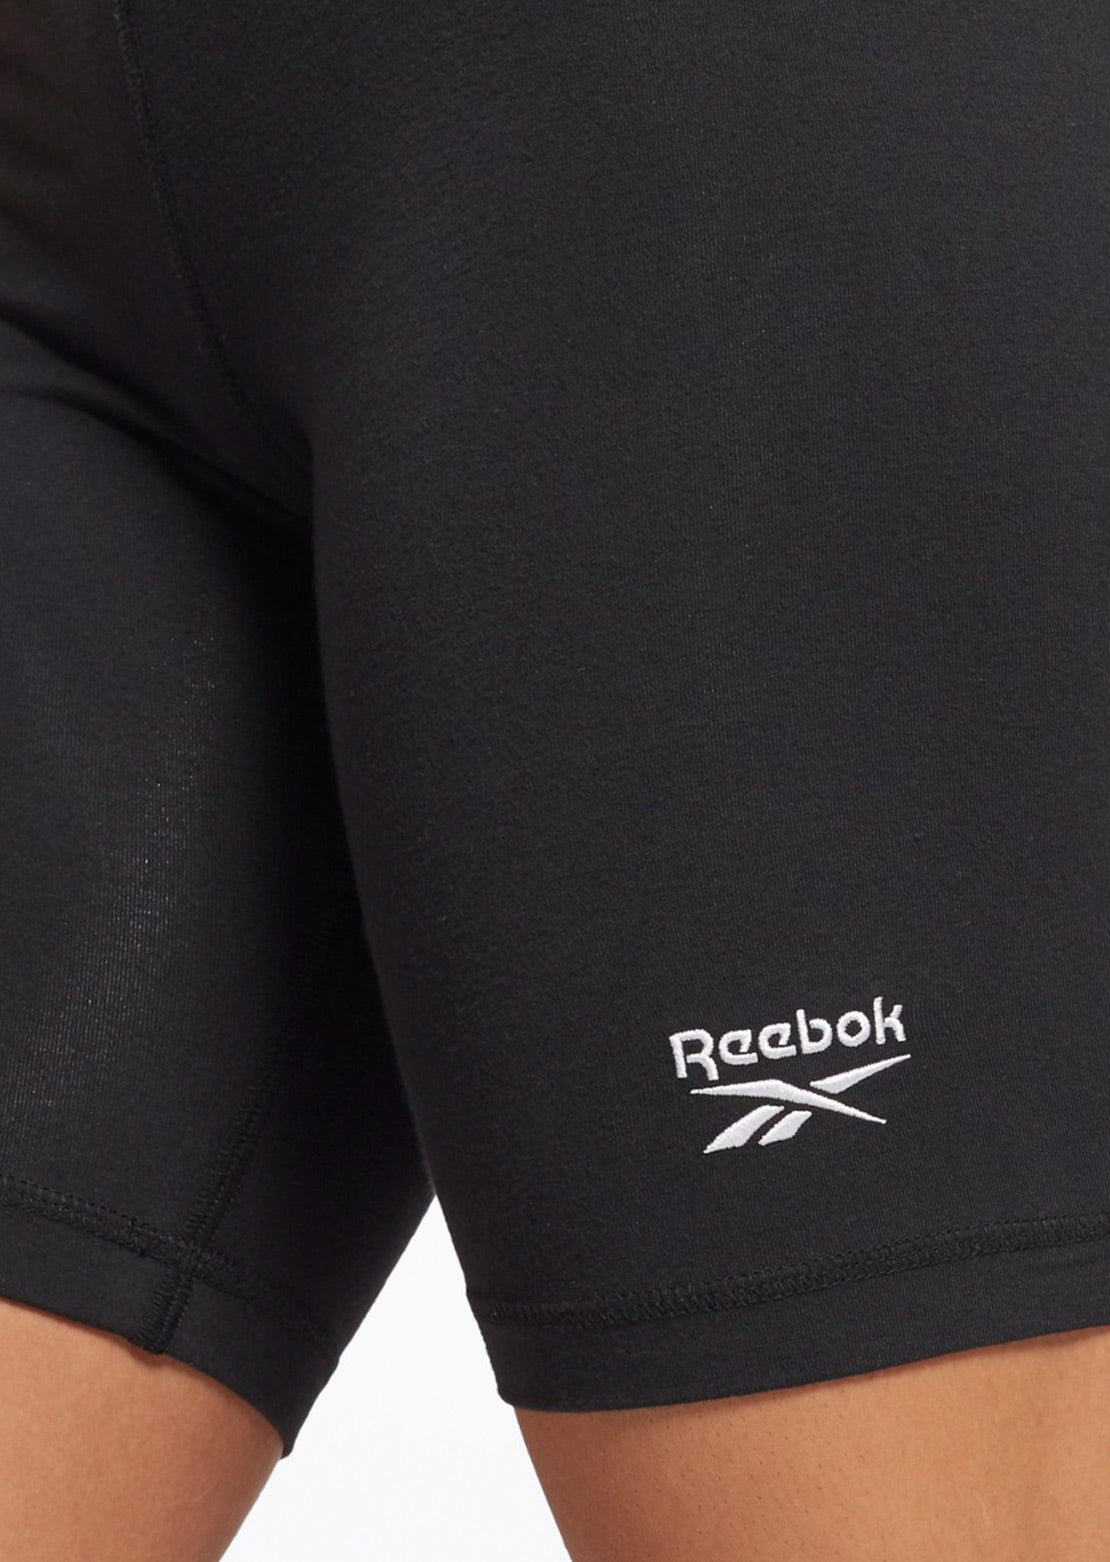 Reebok Women's RI SL Bike Shorts - PRFO Sports